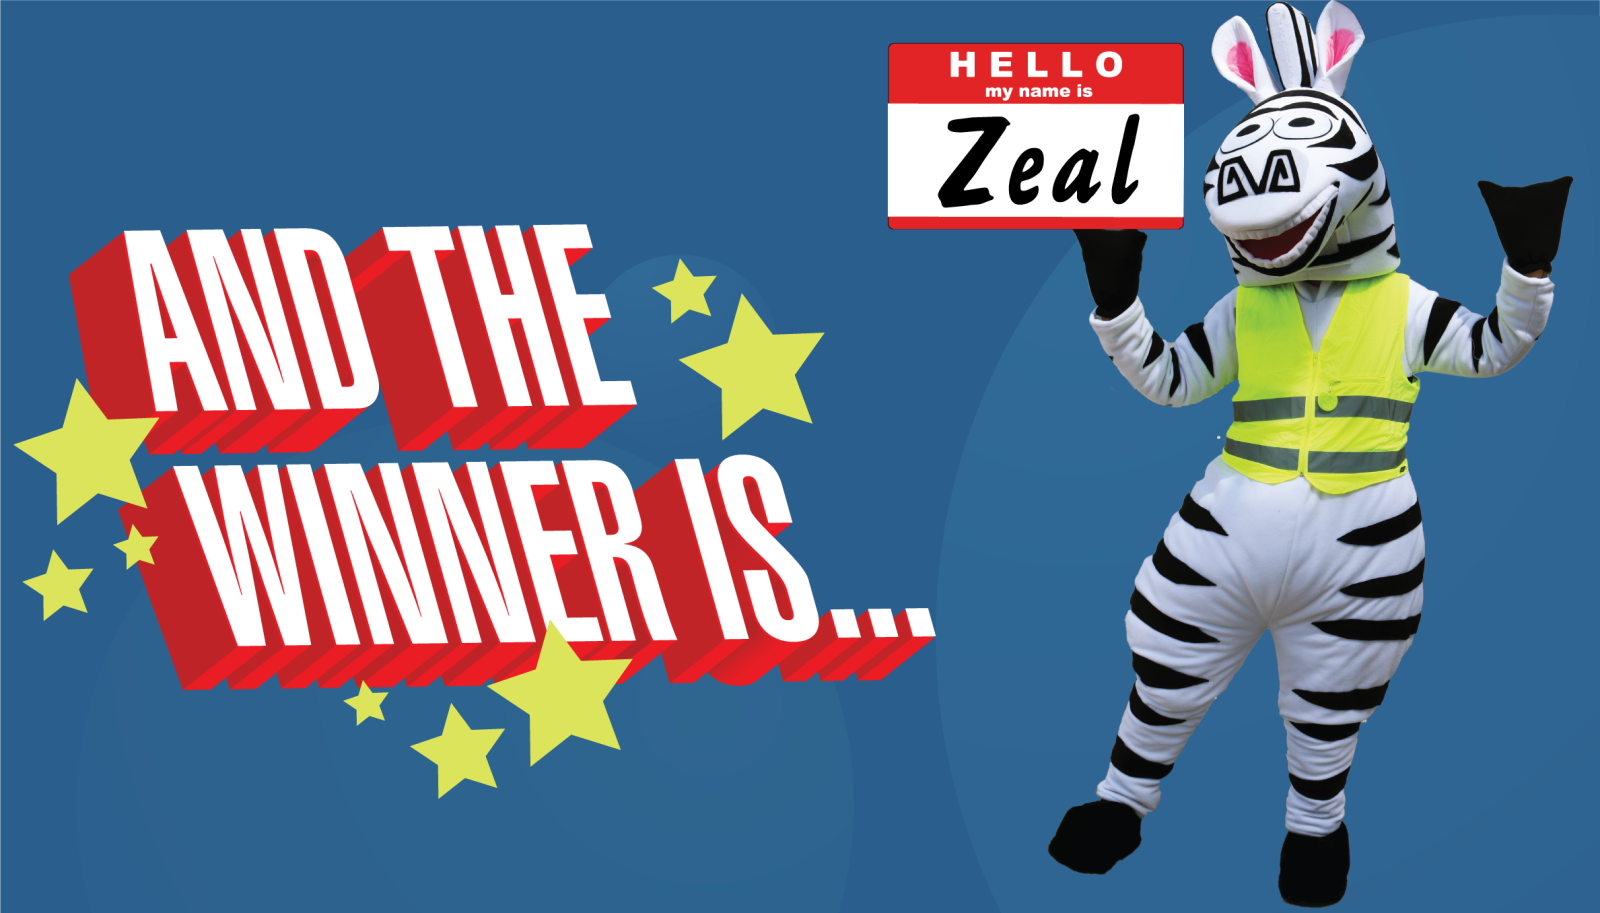 Zebra Name Contest